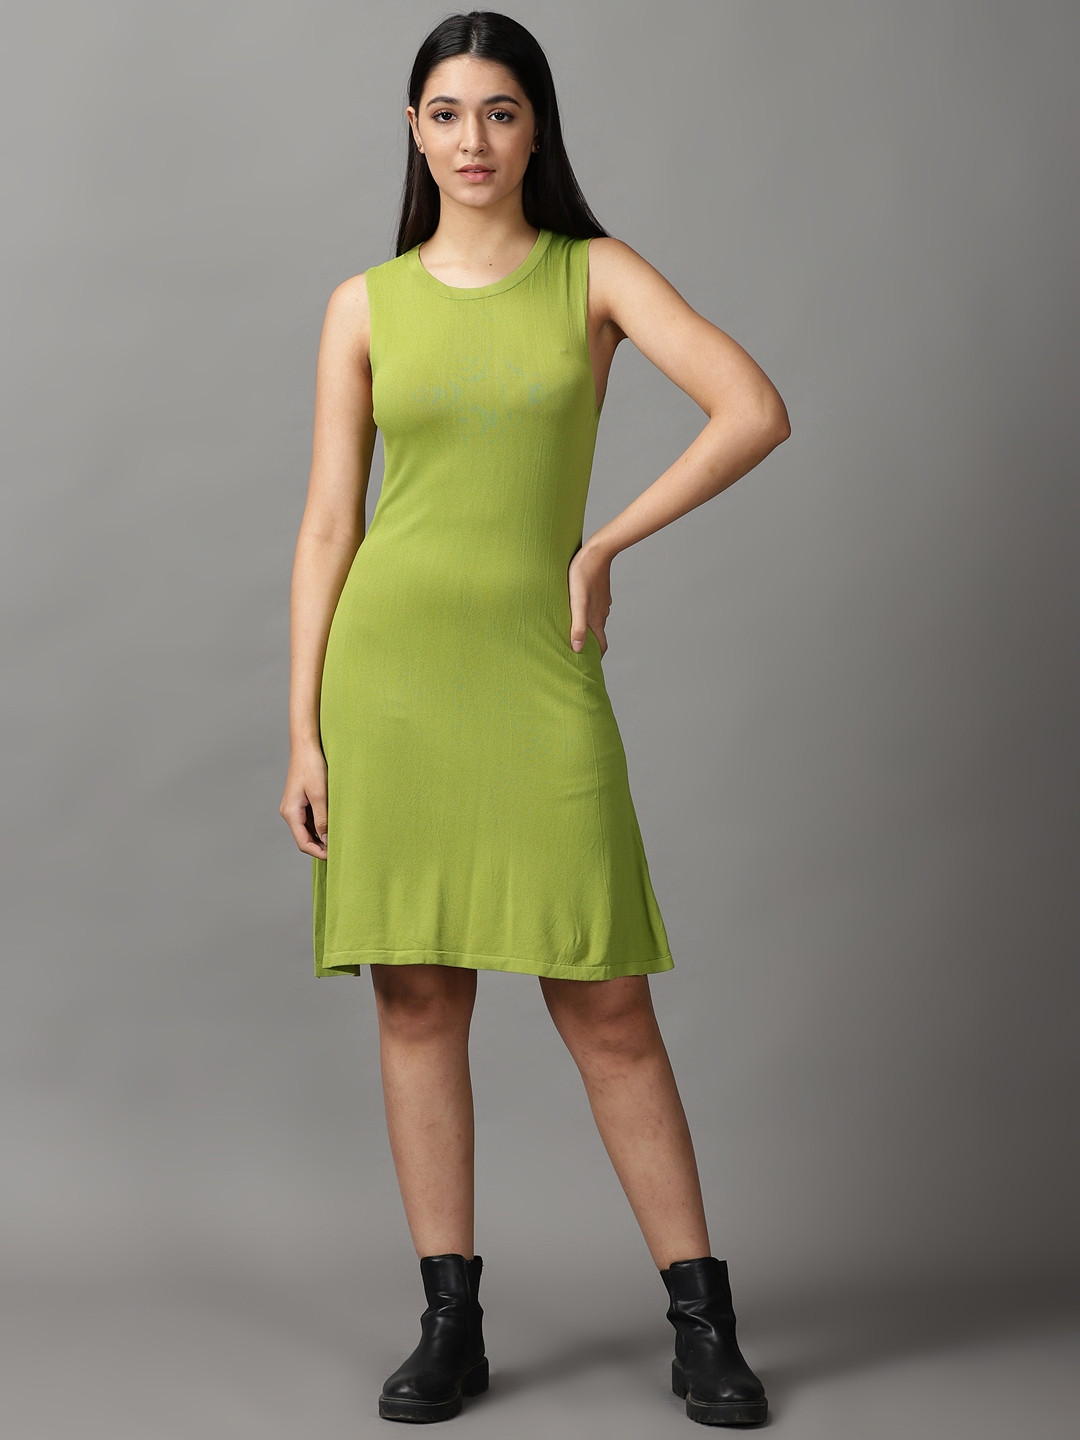 Women's Green Acrylic Solid Dresses